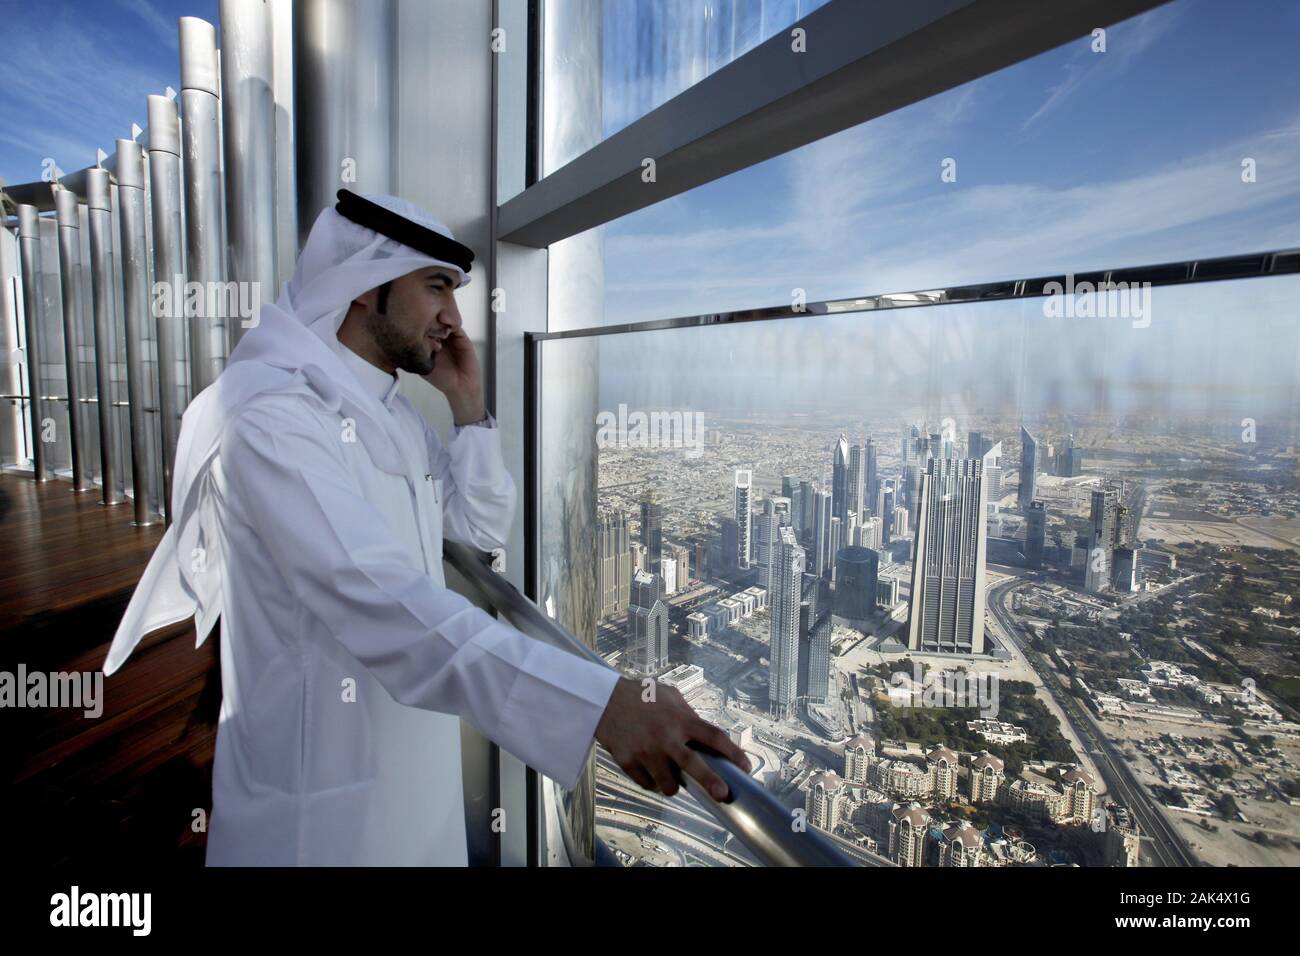 Открыть счет в дубае. Принц Дубая на на Бурдж Халифа. ОАЭ Буш Халиф 2011 год. Дубай Абу Даби путешествие. Бизнес в ОАЭ.